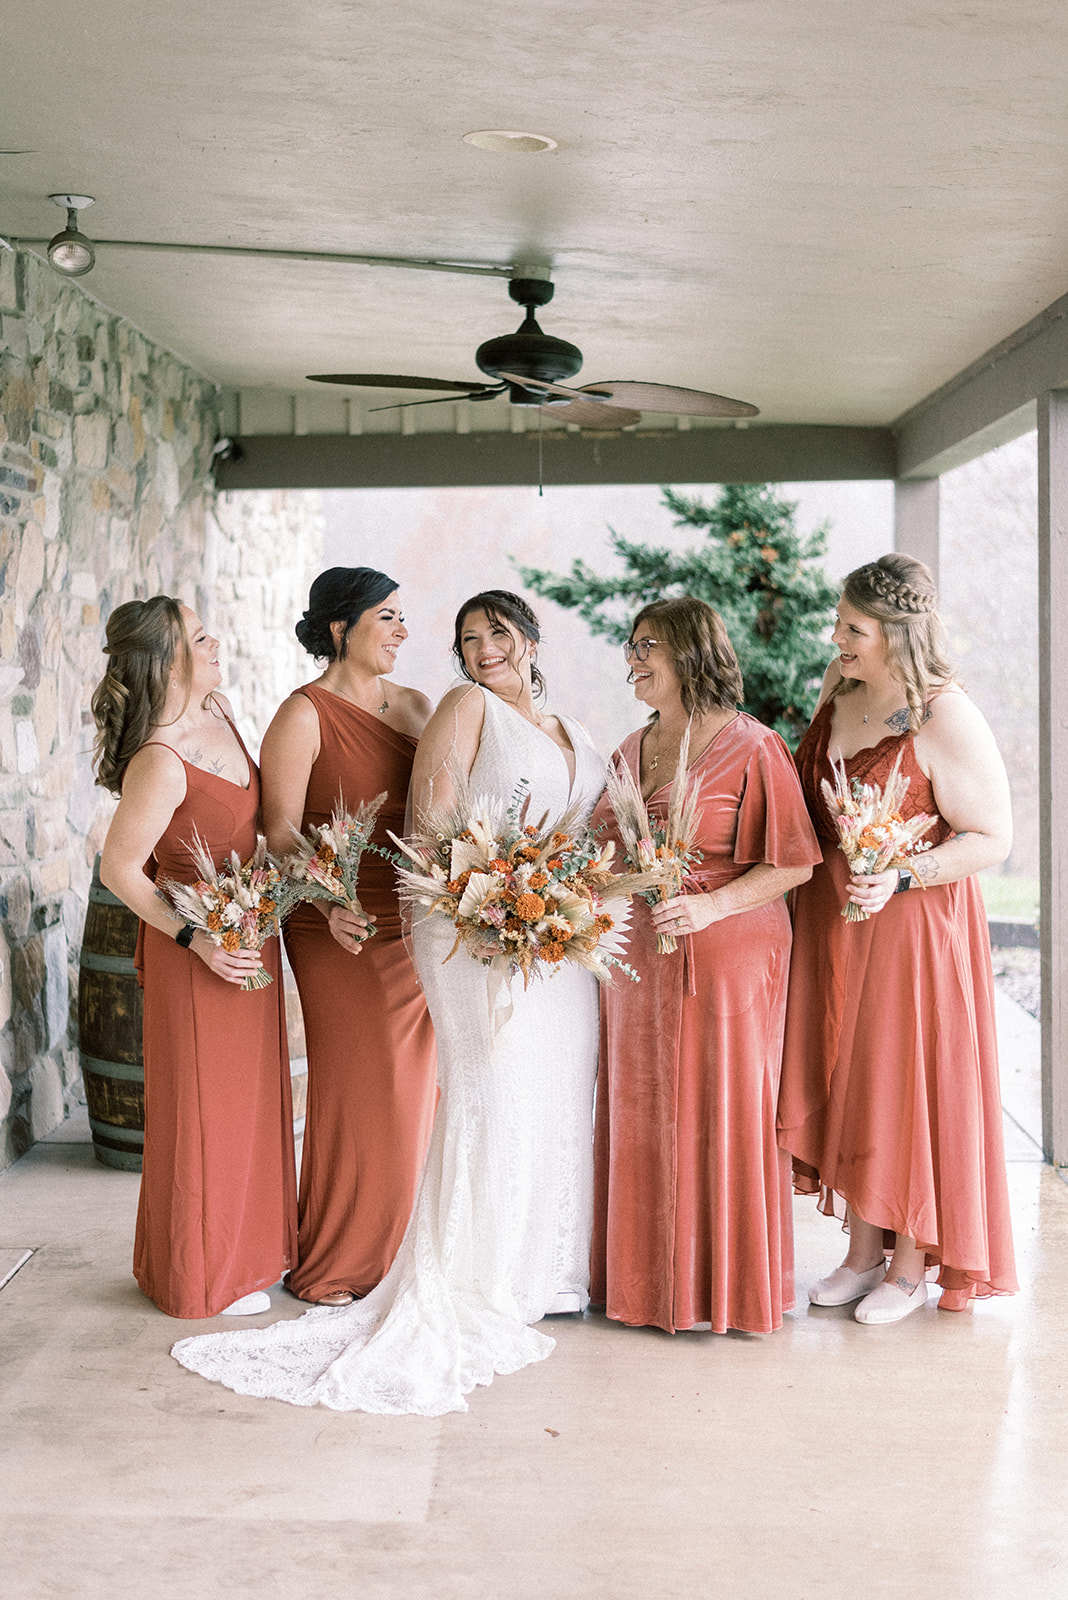 Pennsylvania wedding photographer captures bride with bridesmaids